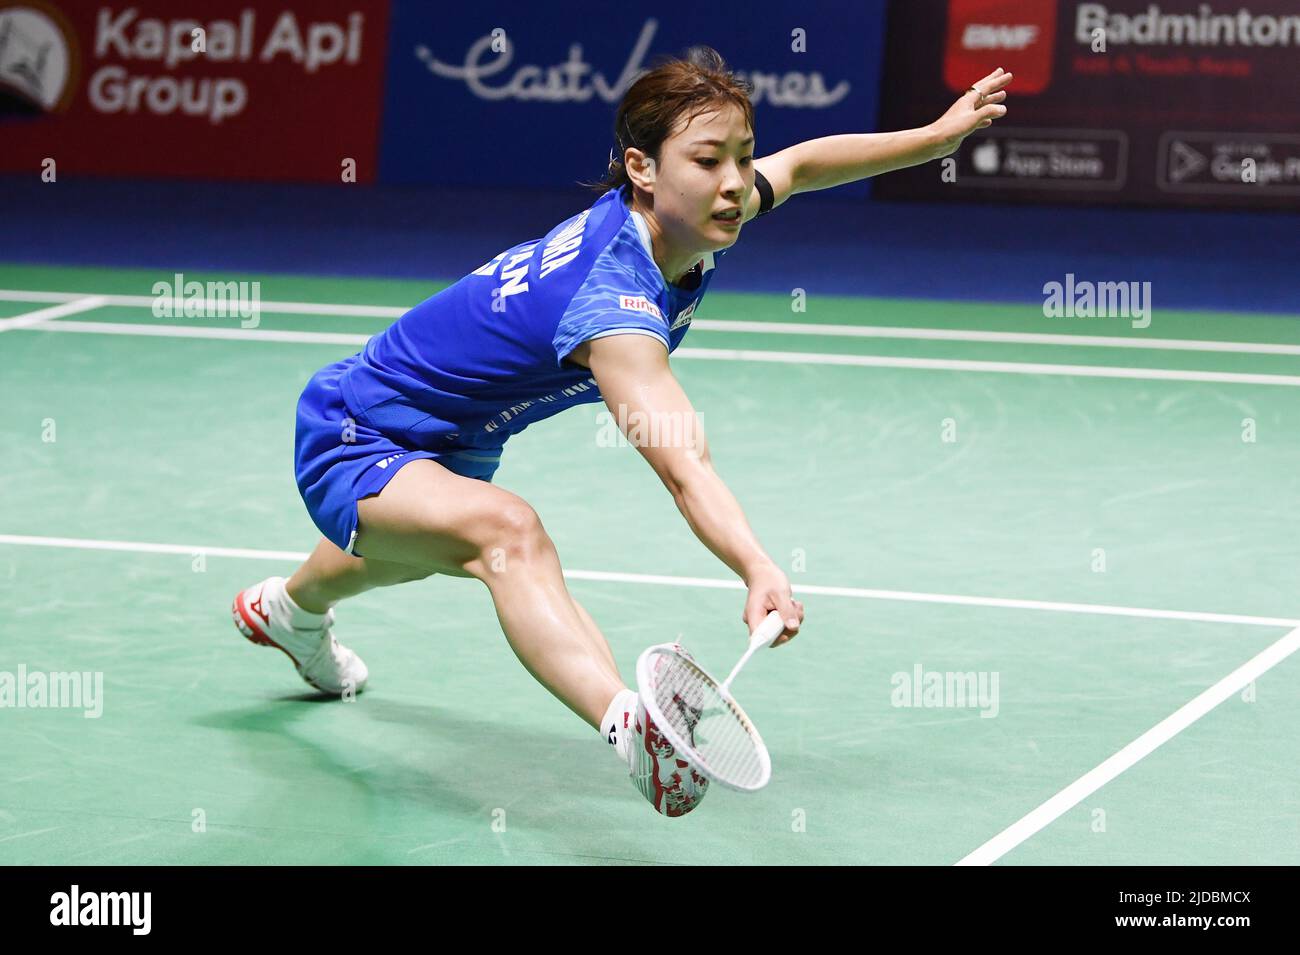 Jakarta, Indonesia. 17th June, 2022. Nozomi Okuhara (JPN) Badminton :  Badminton : EAST VENTURES INDONESIA OPEN 2022 Women's